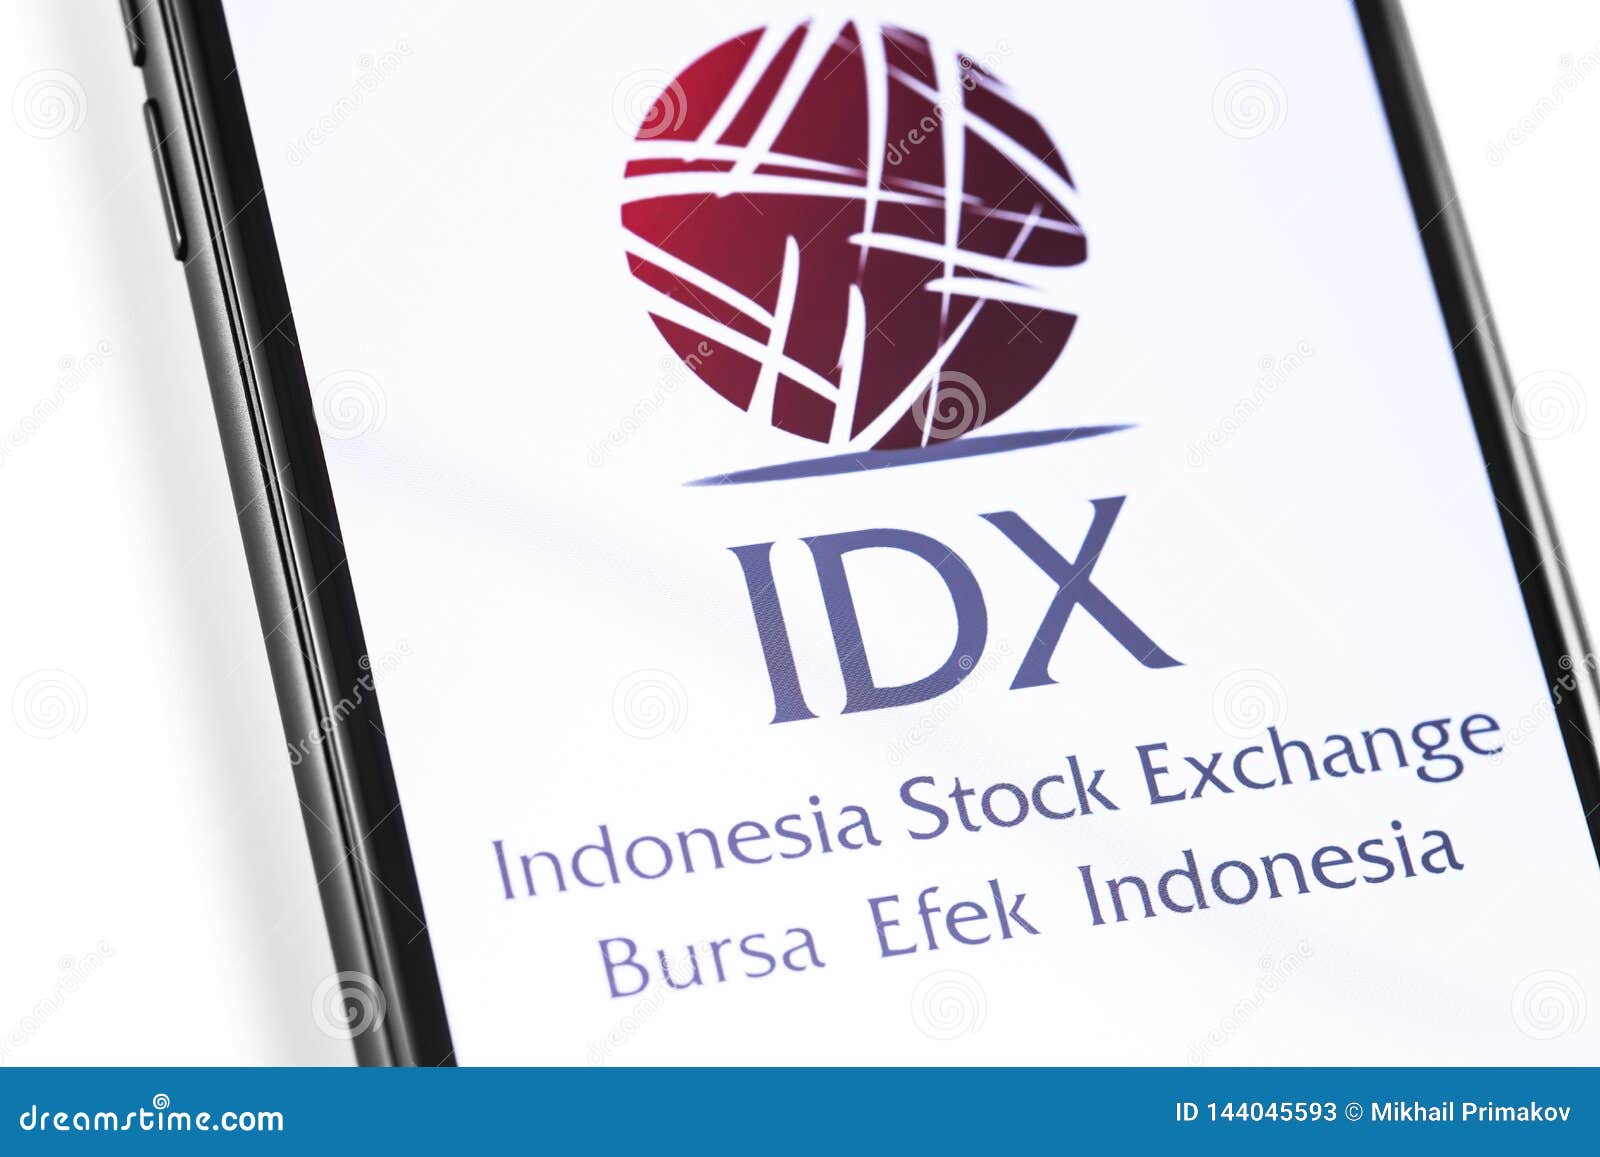 Idx International Derivatives